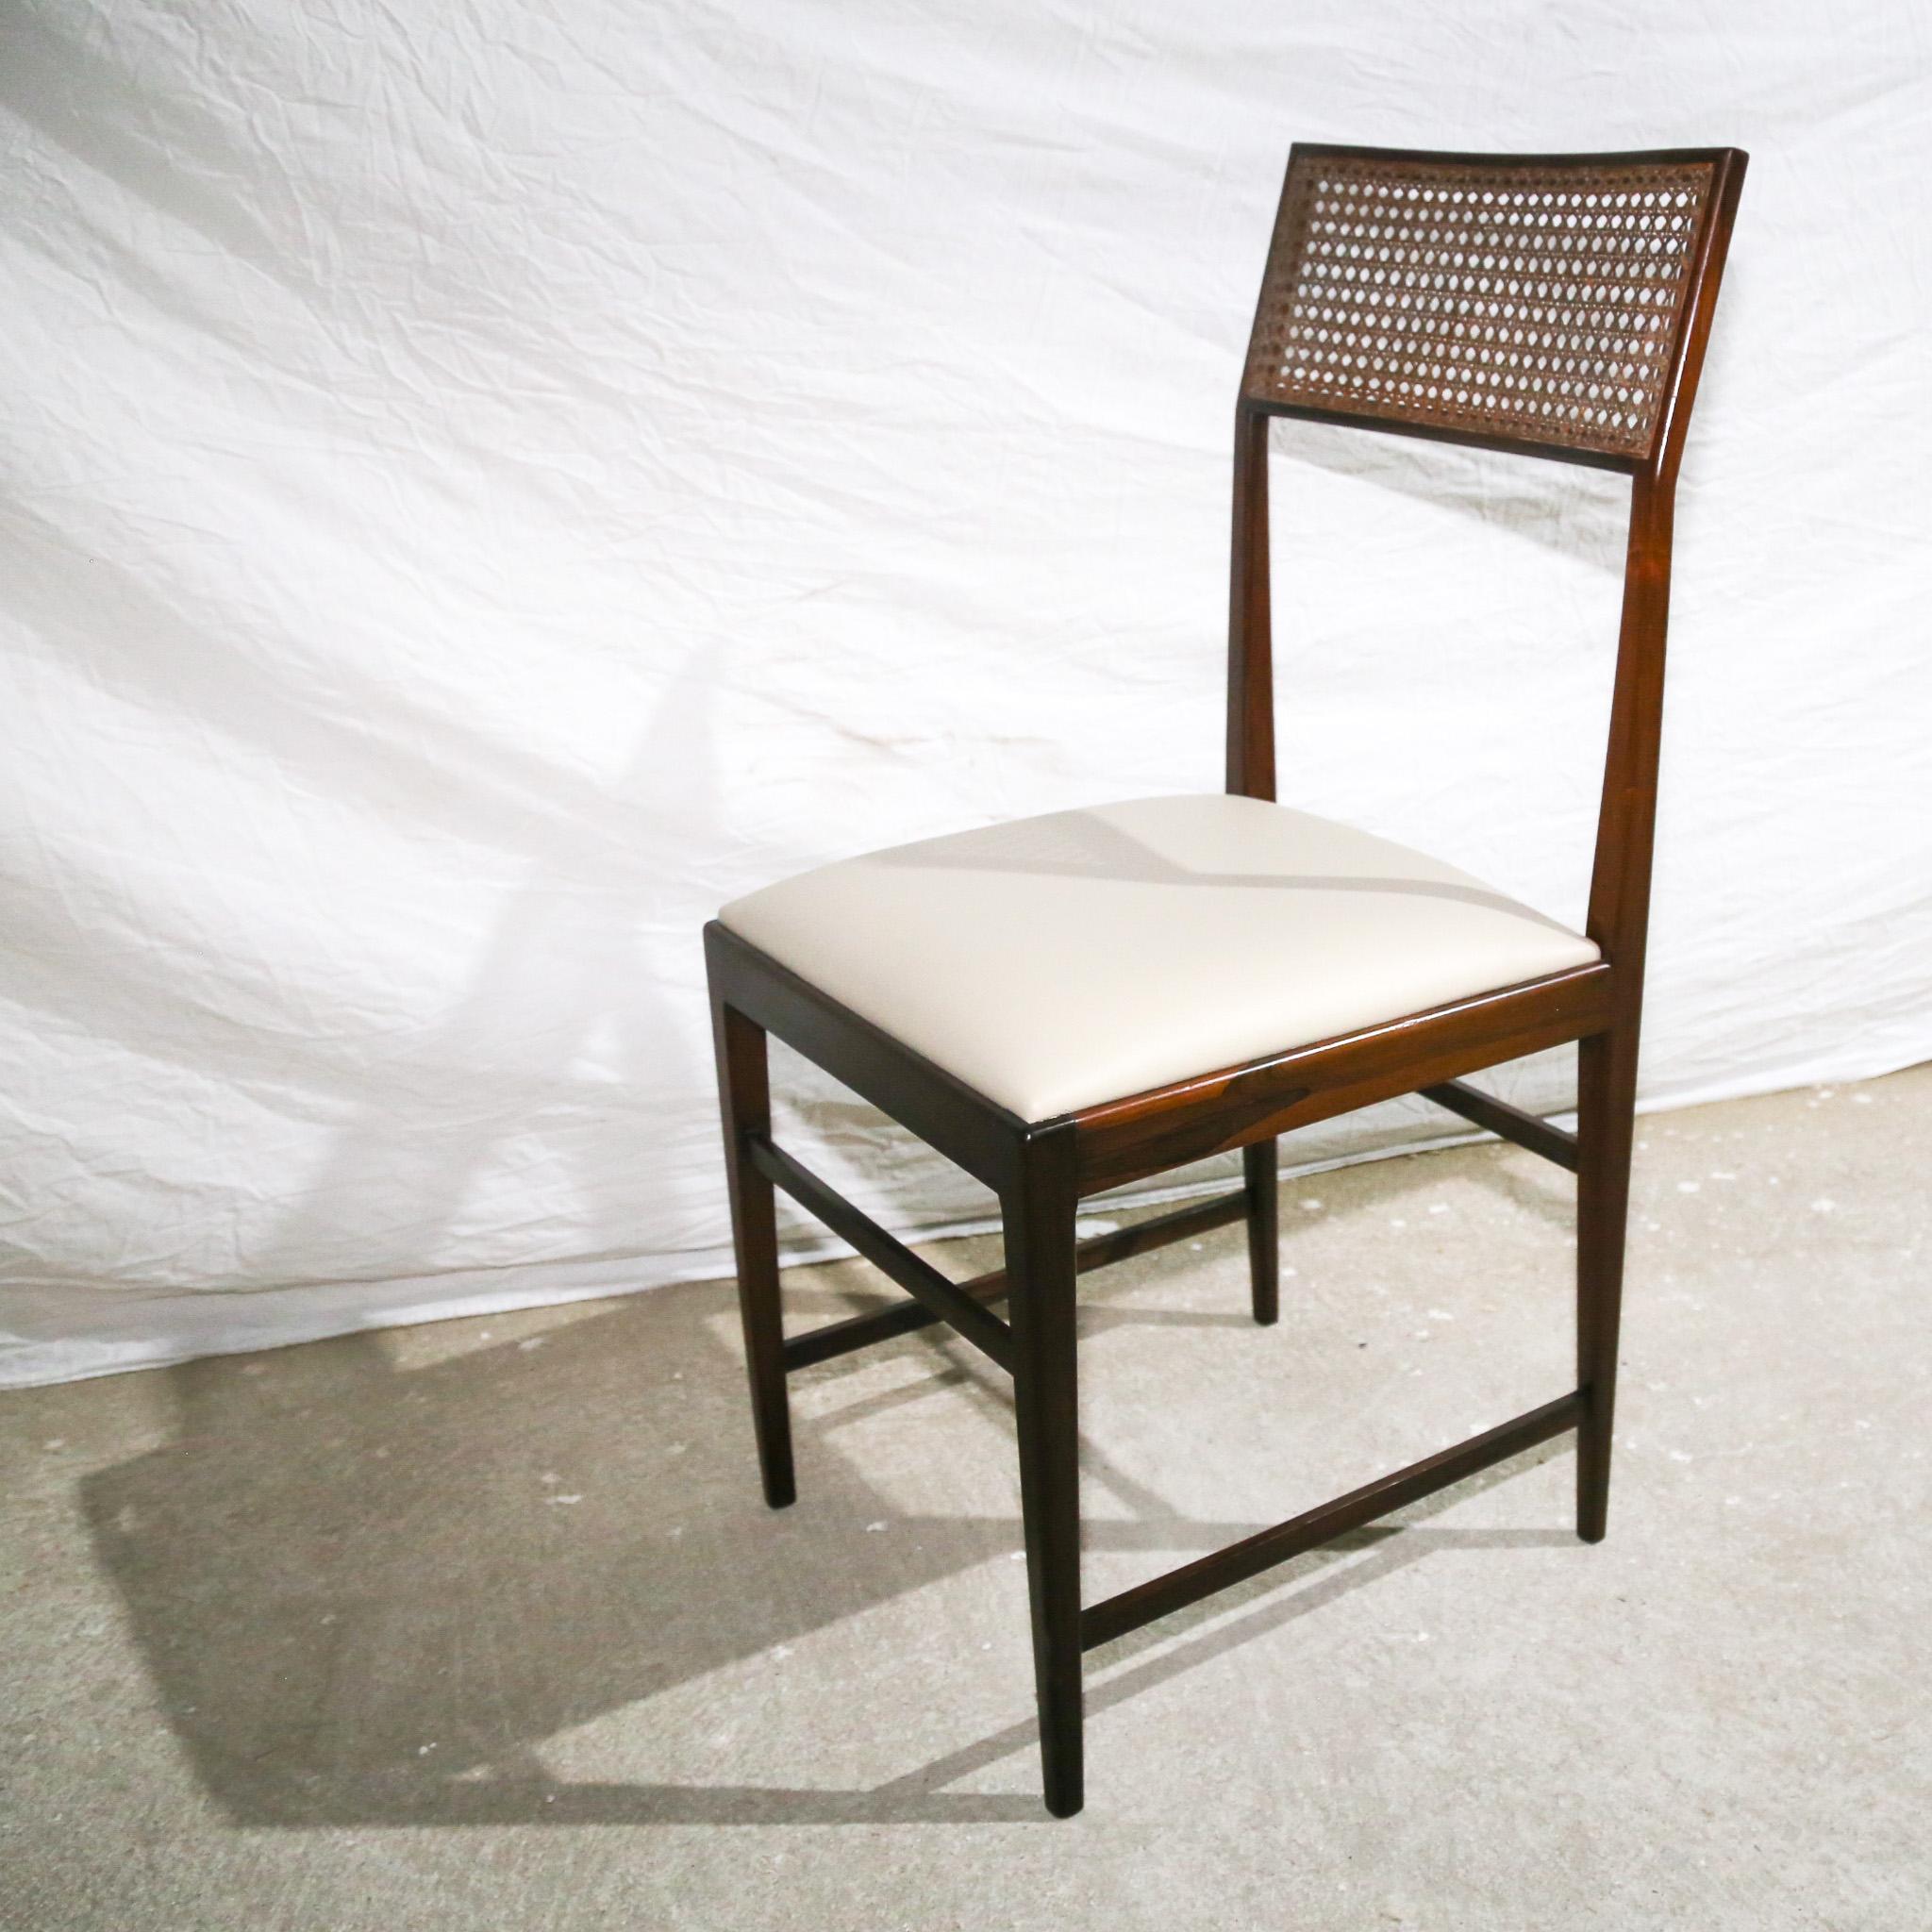 Brazilian Modern 4 Chair Set in Hardwood, Cane, Leather, Joaquim Tenreiro 1950s For Sale 8